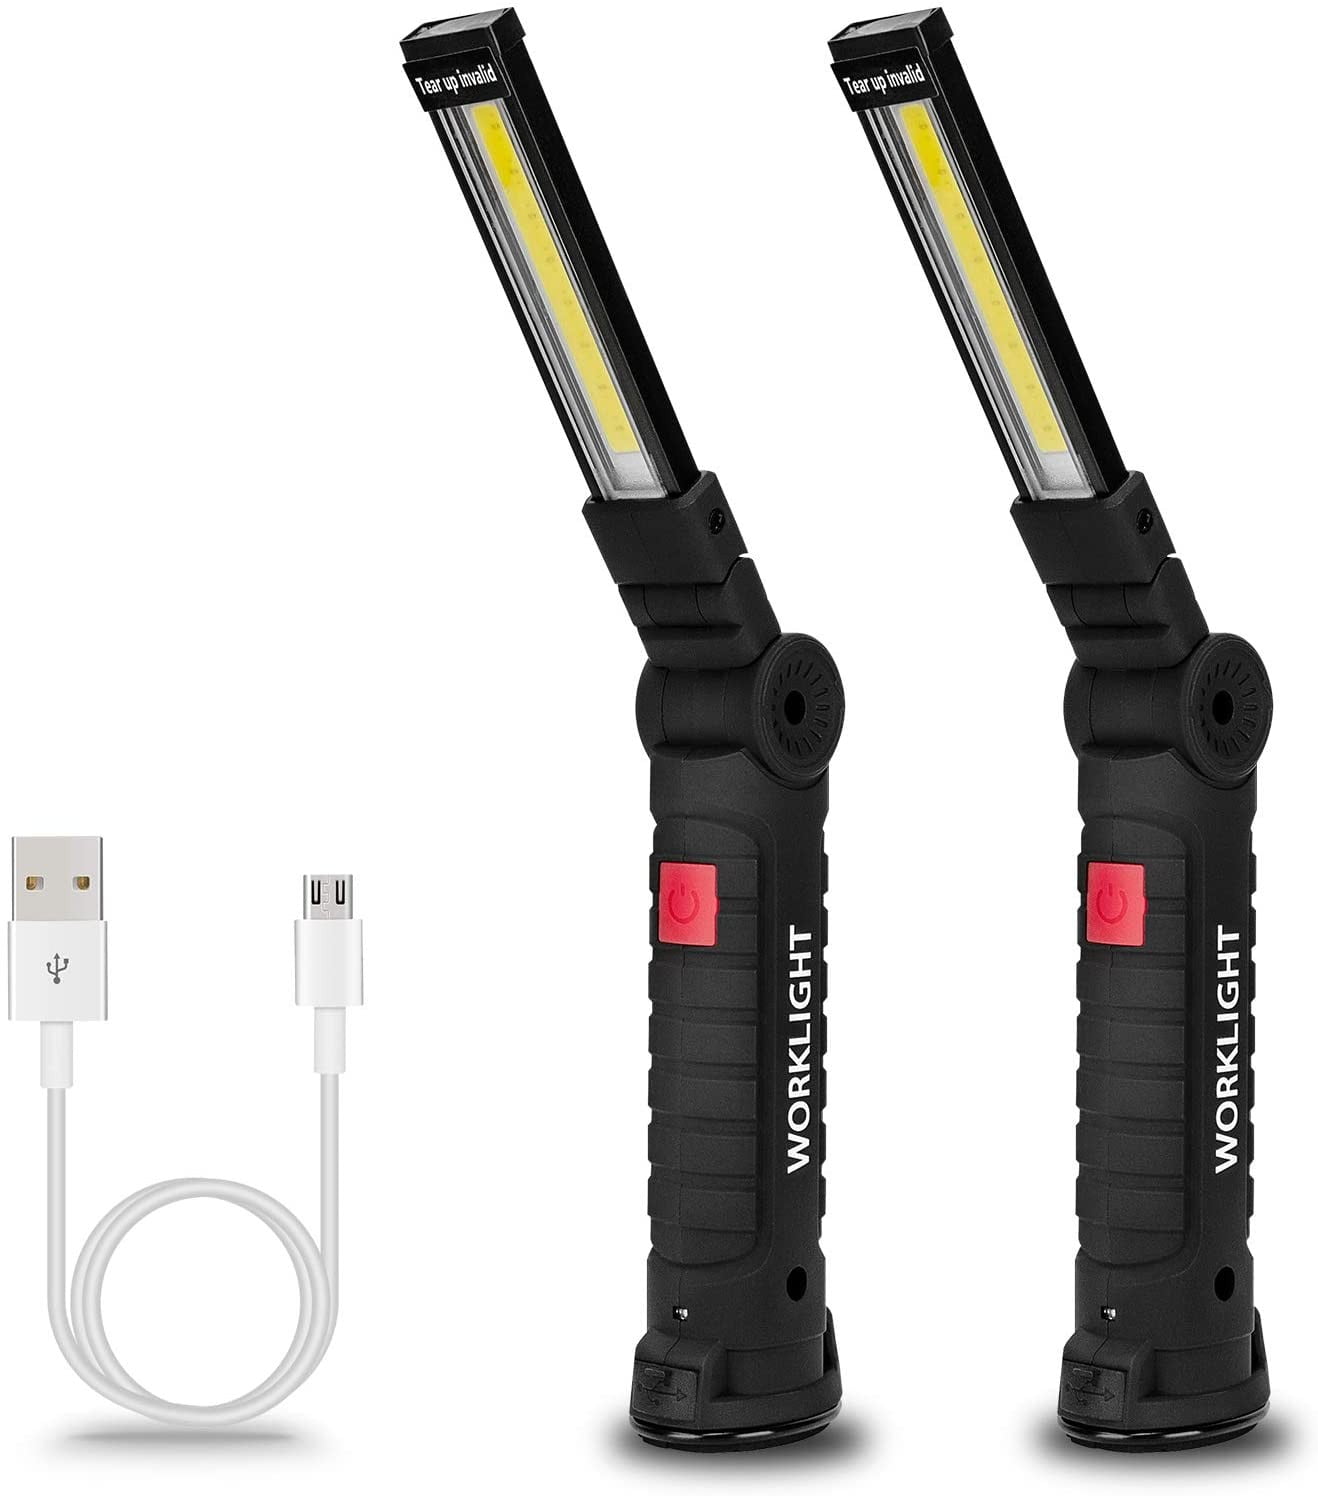 Rechargeable COB Led Work Light Portable Magnetic Base Flashlight-2 PACK 